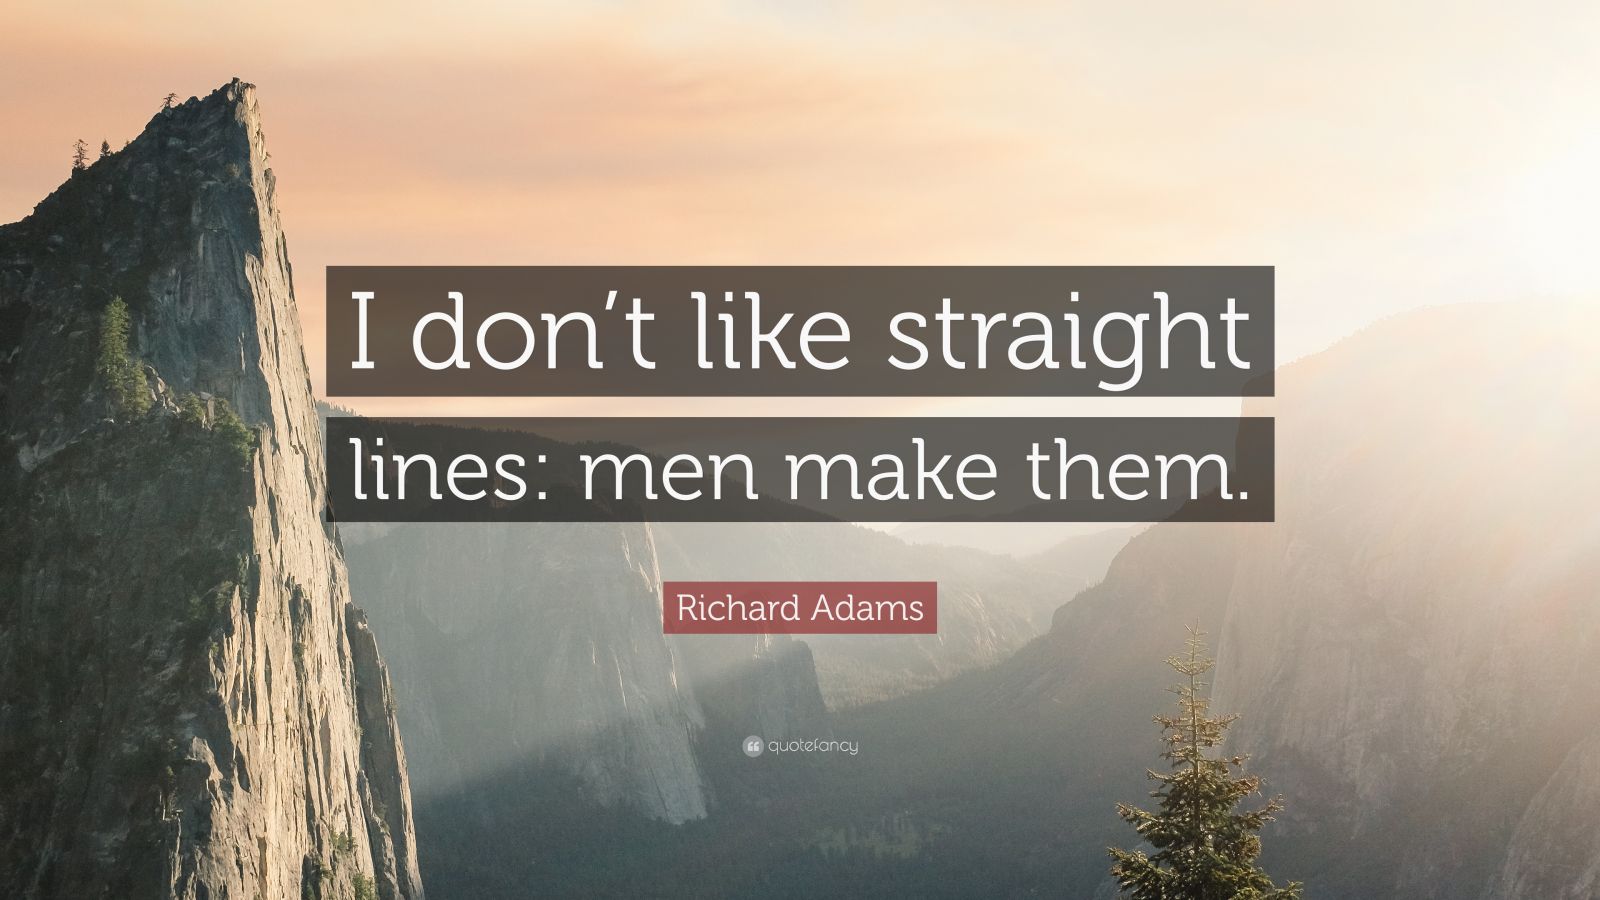 Richard Adams Quote “i Dont Like Straight Lines Men Make Them” 